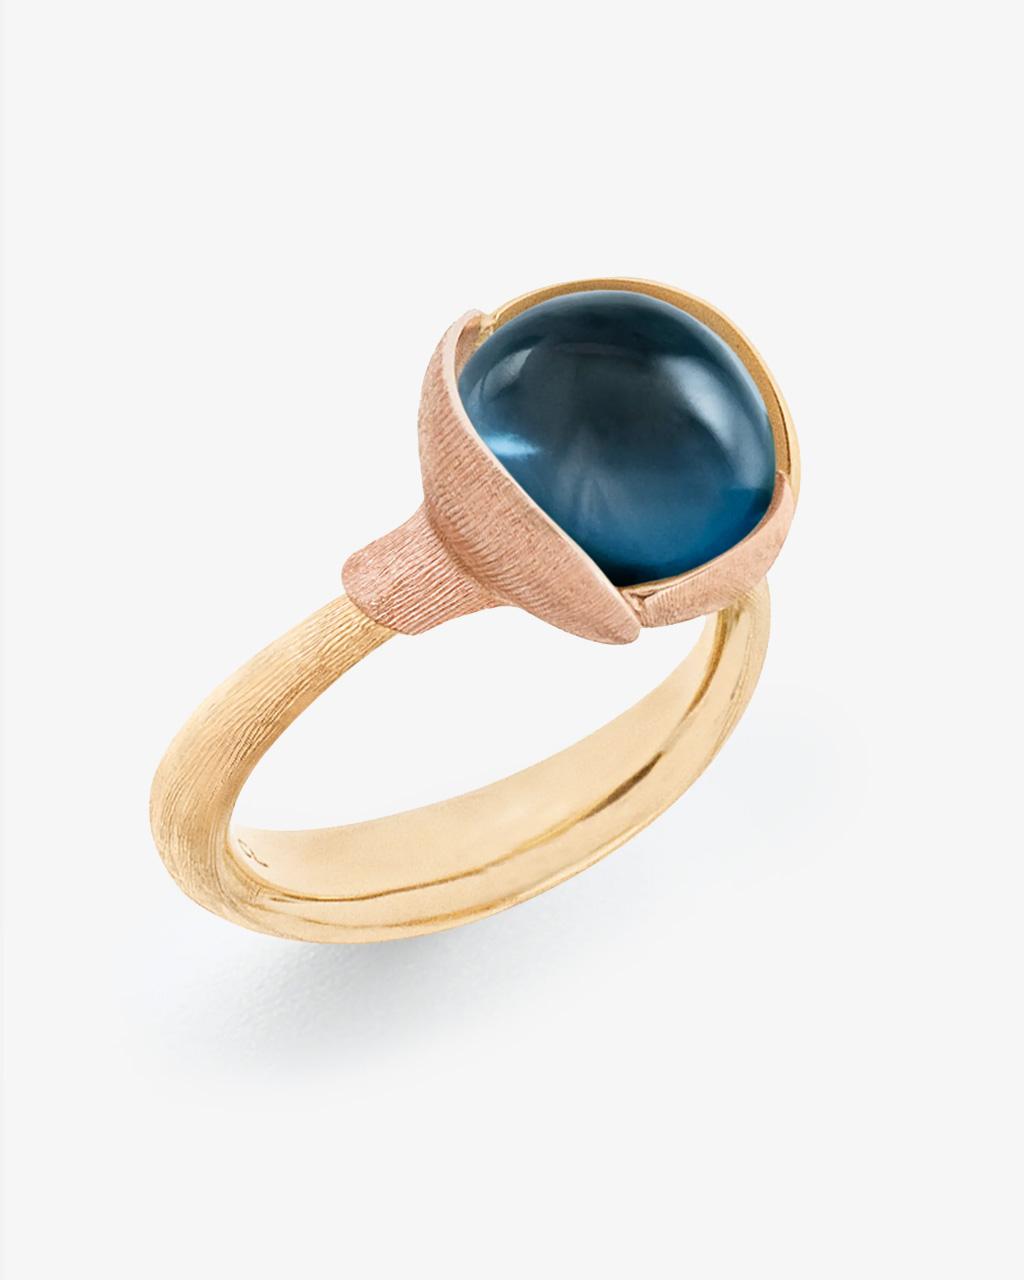 Ole Lynggaard 'Lotus' London Blue Topaz Ring - Size 1